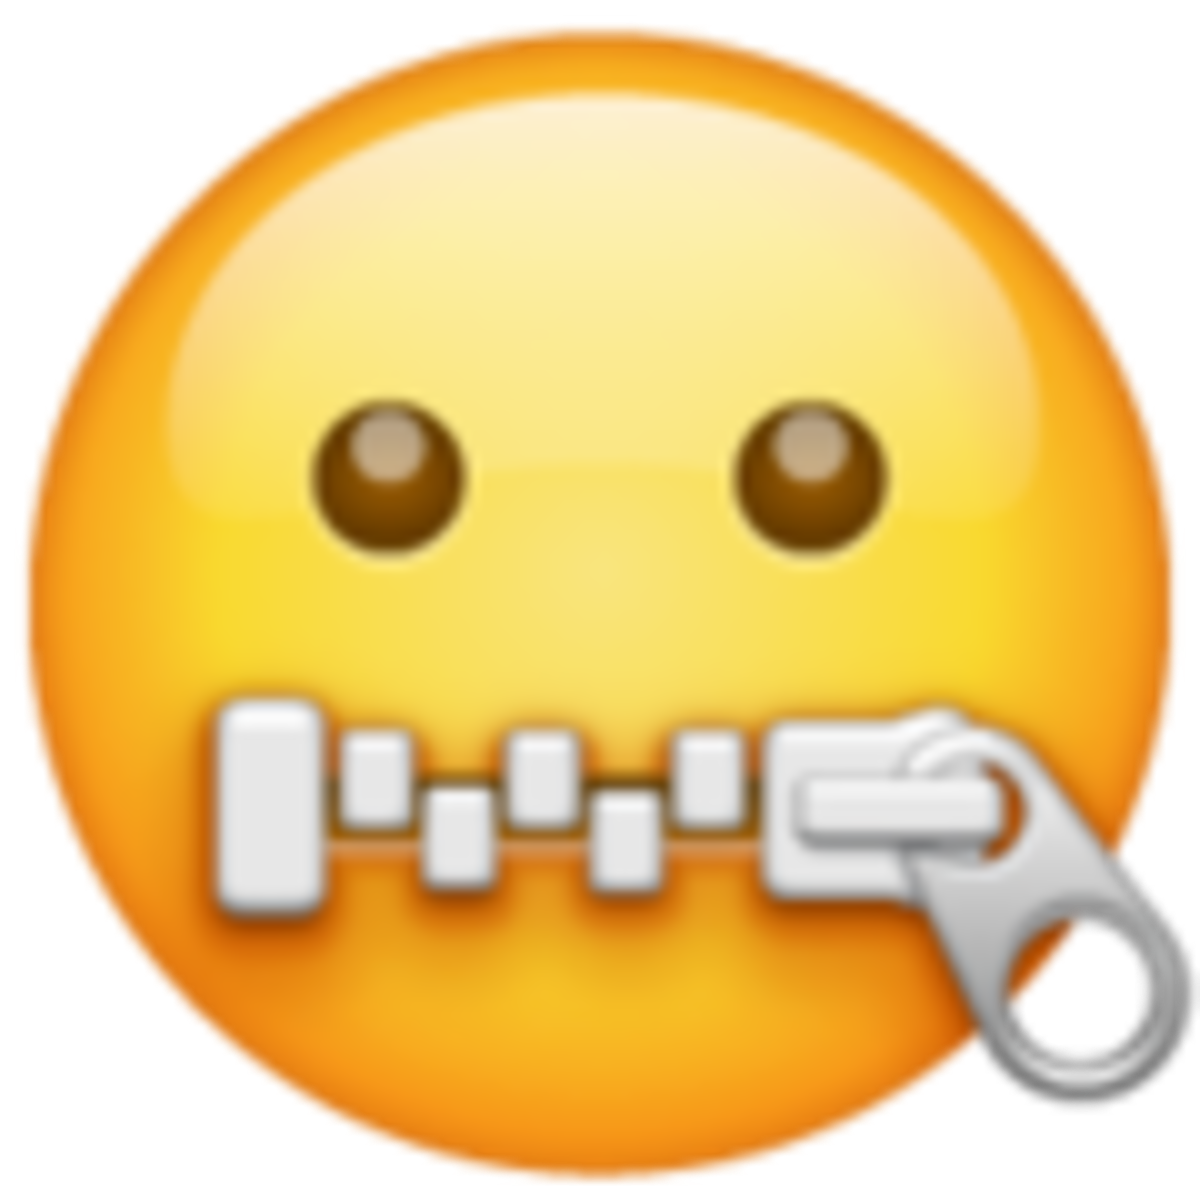 Emoji 1f910, cara con cremallera